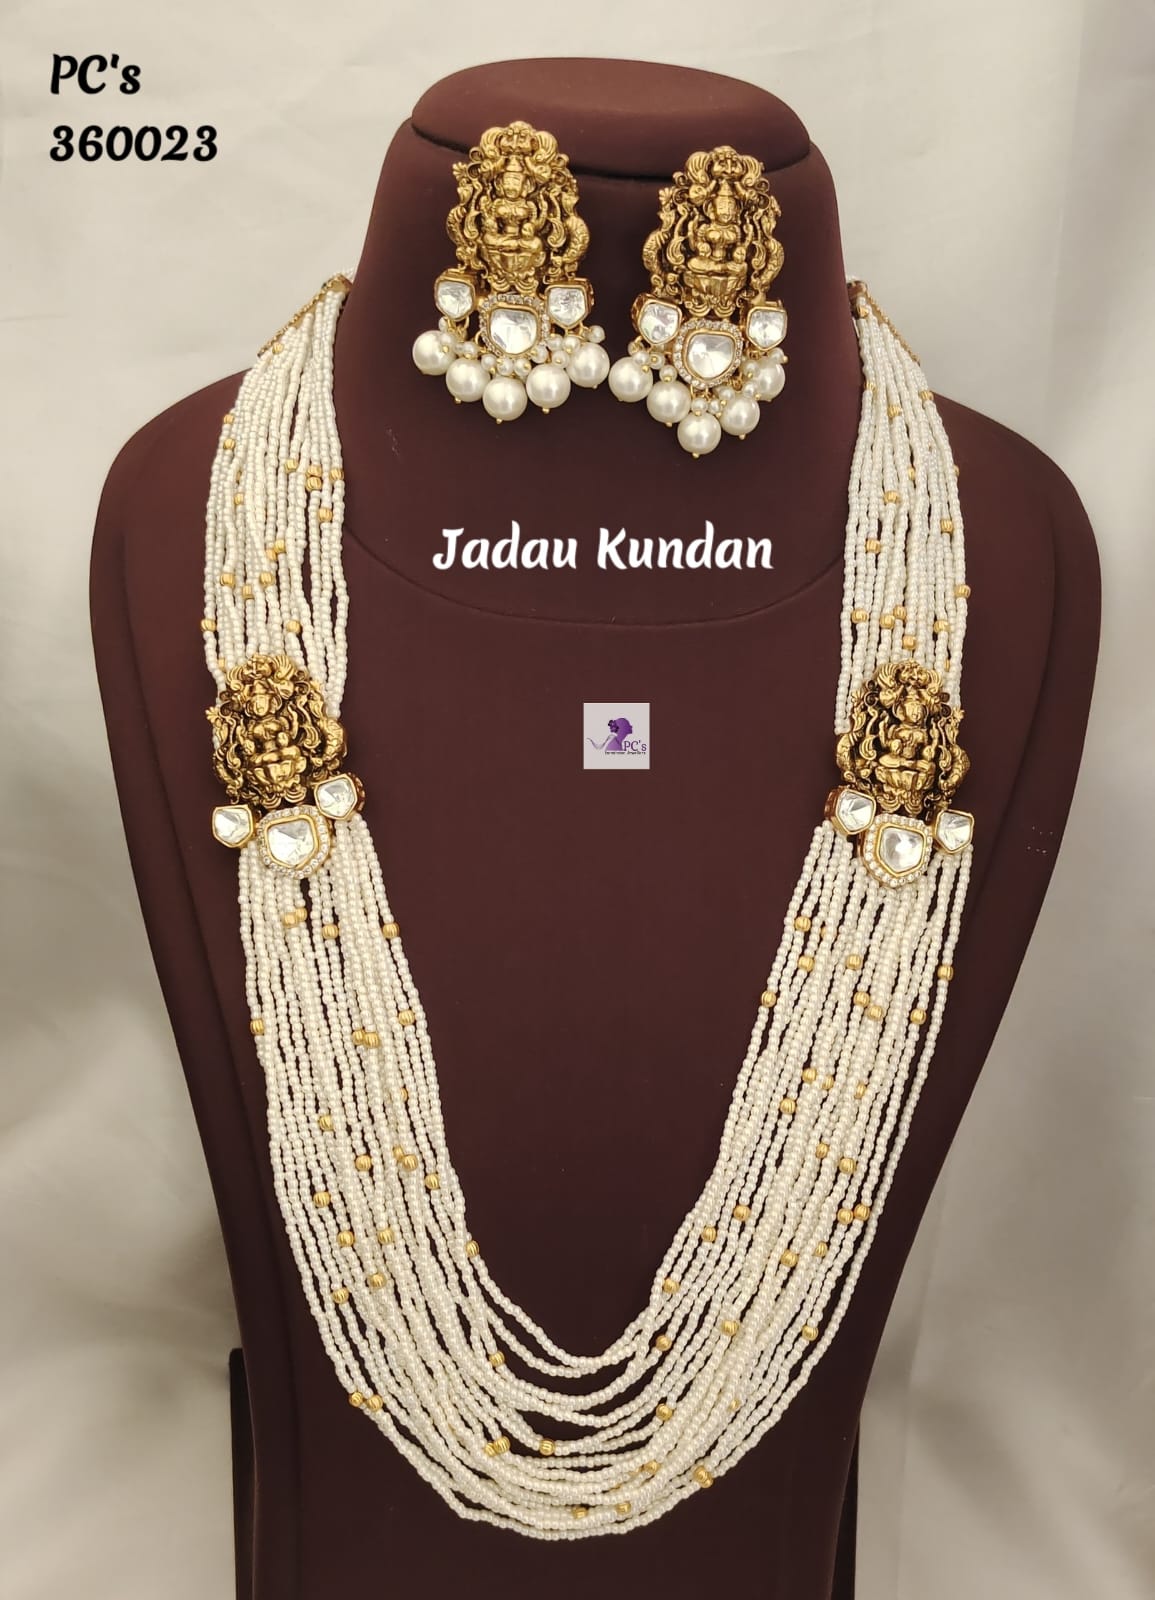 Picture of Jadau Kundan Pearl Necklace